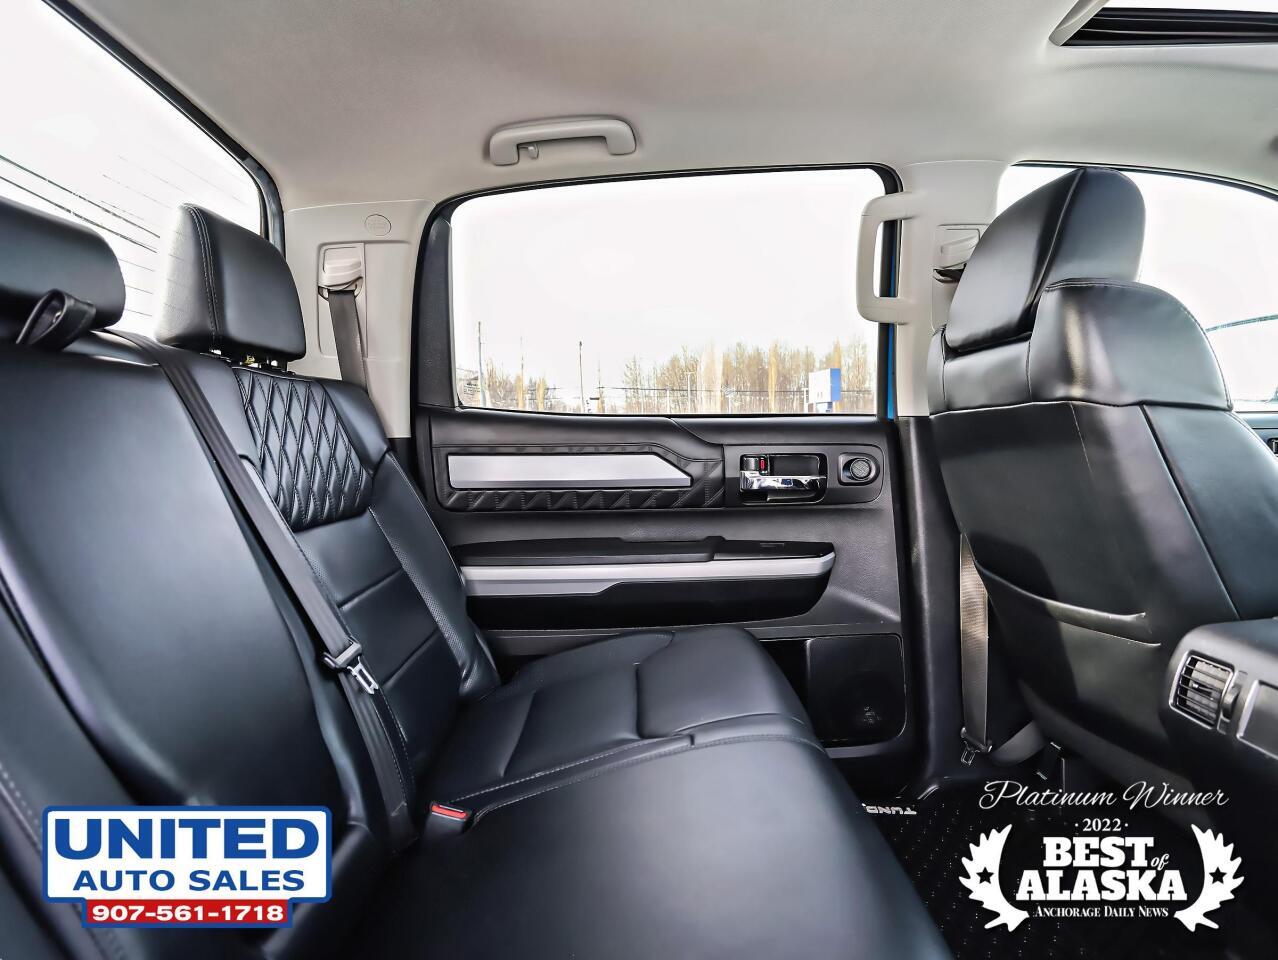 2018 Toyota Tundra Platinum 4x4 4dr CrewMax Cab Pickup SB (5.7L V8) 15